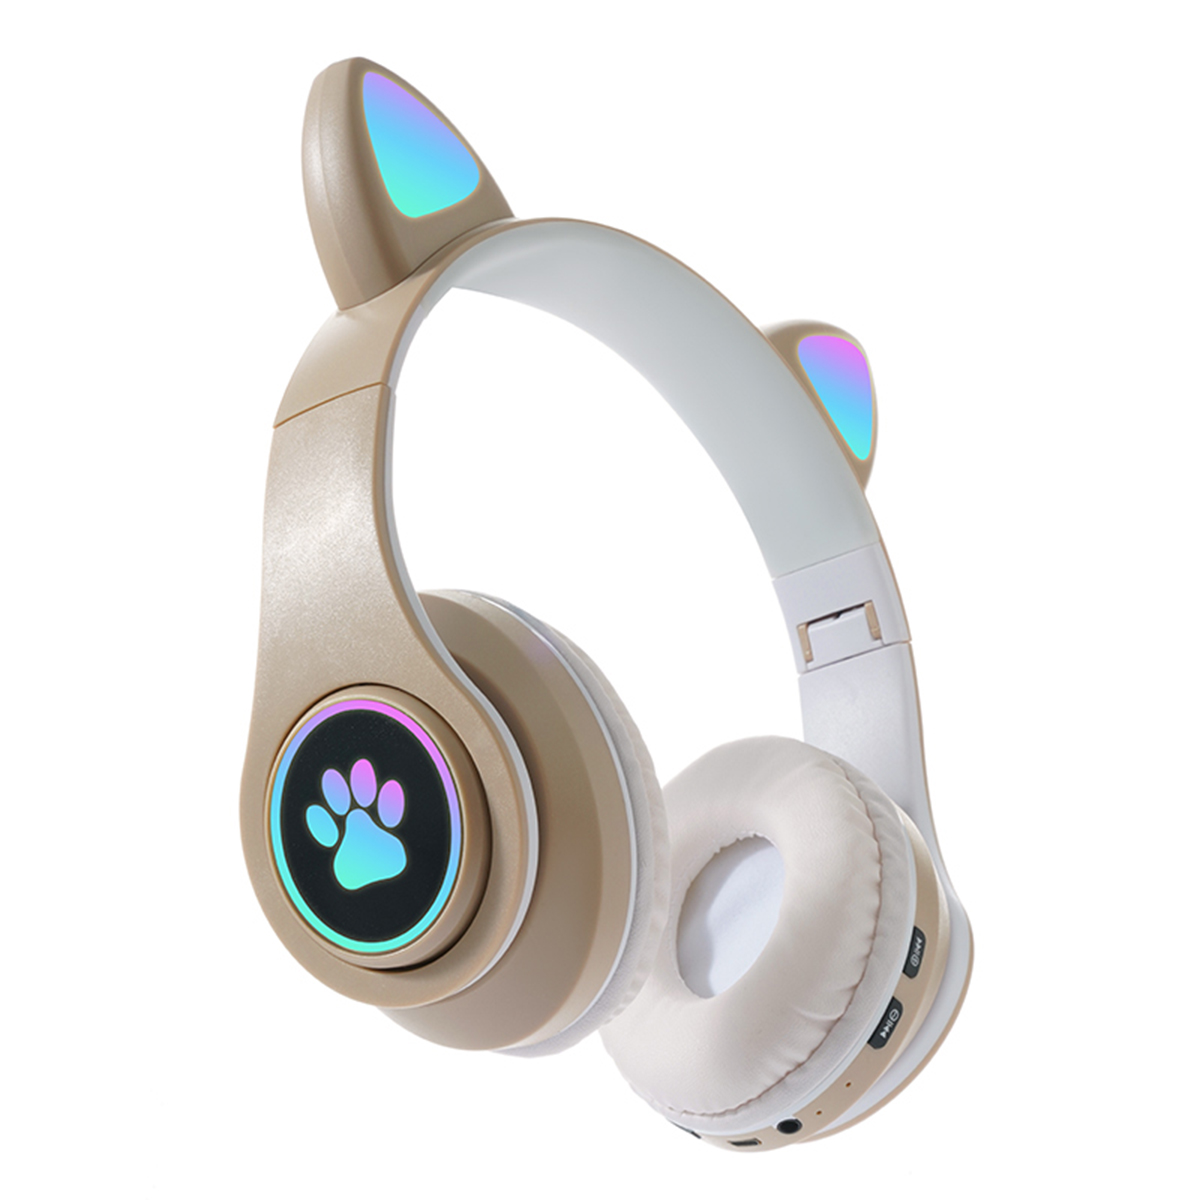 KINSI Drahtloses Headset, kompatibel Bluetooth Bluetooth-Headset Faltbares, mit Over-ear Golden Computer/Telefon, Gaming-Headset